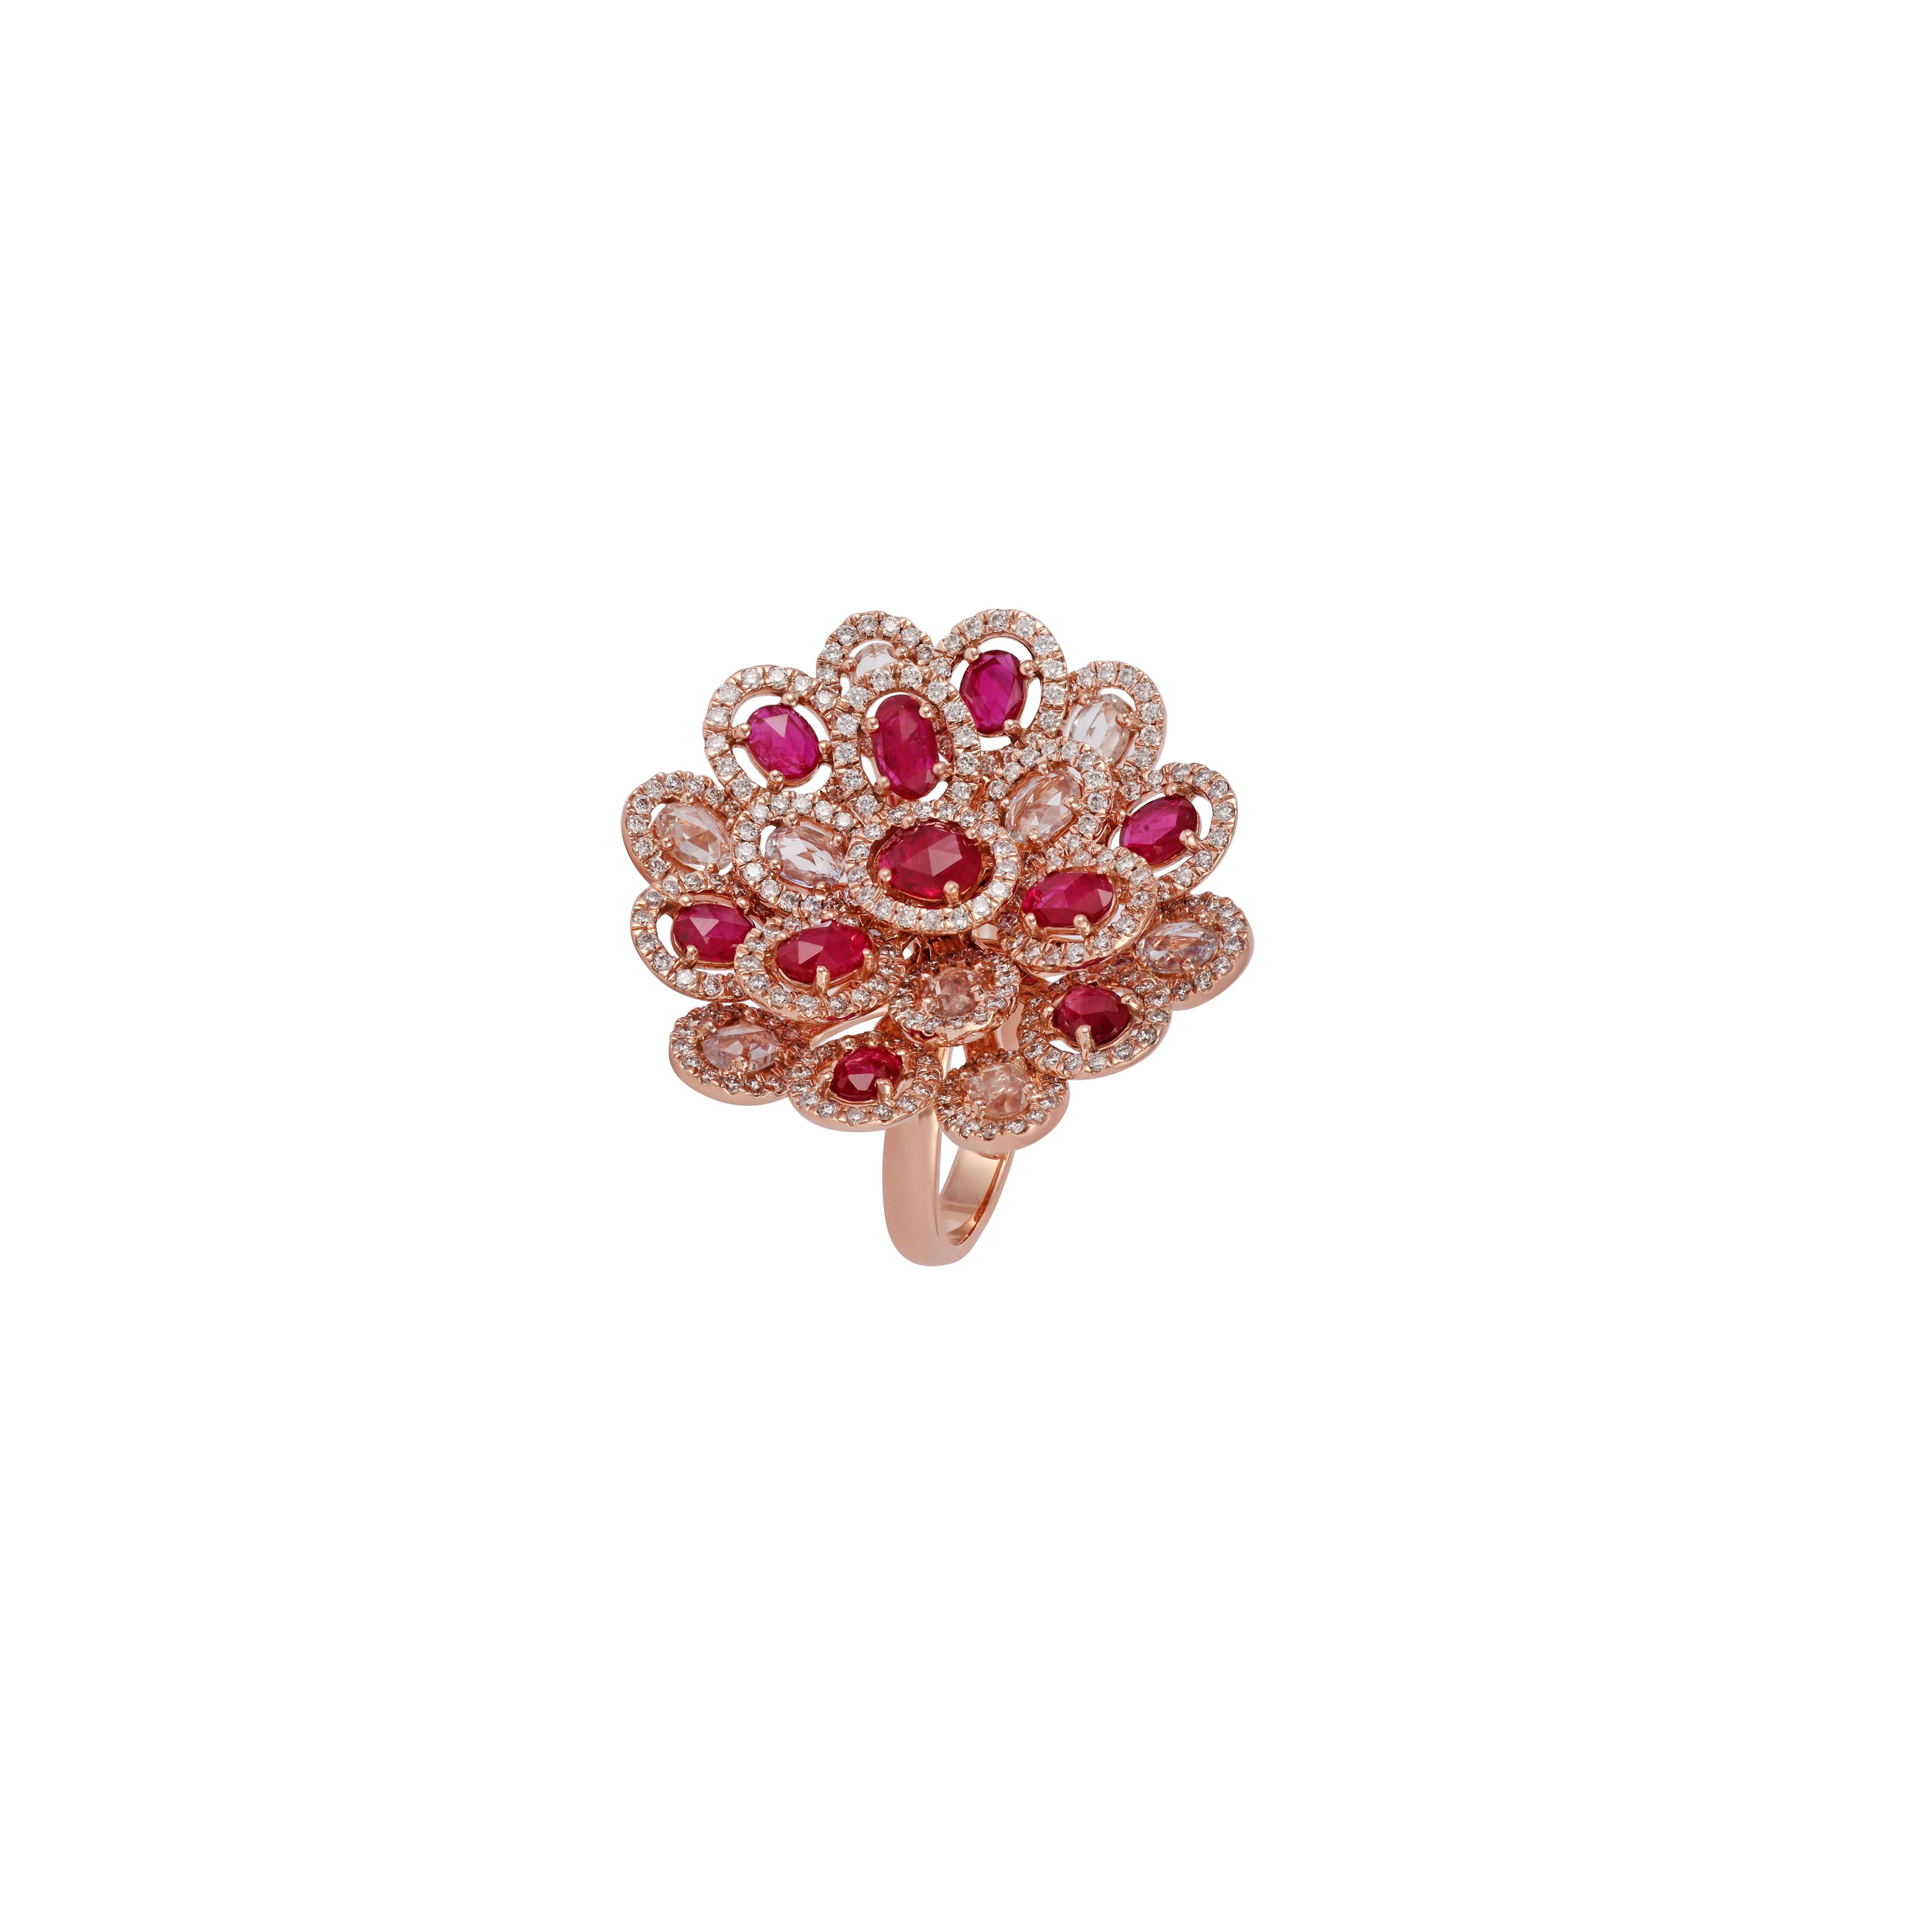 Rose Cut Ruby White Sapphire & Diamond Ring Studded in 18k Rose Gold